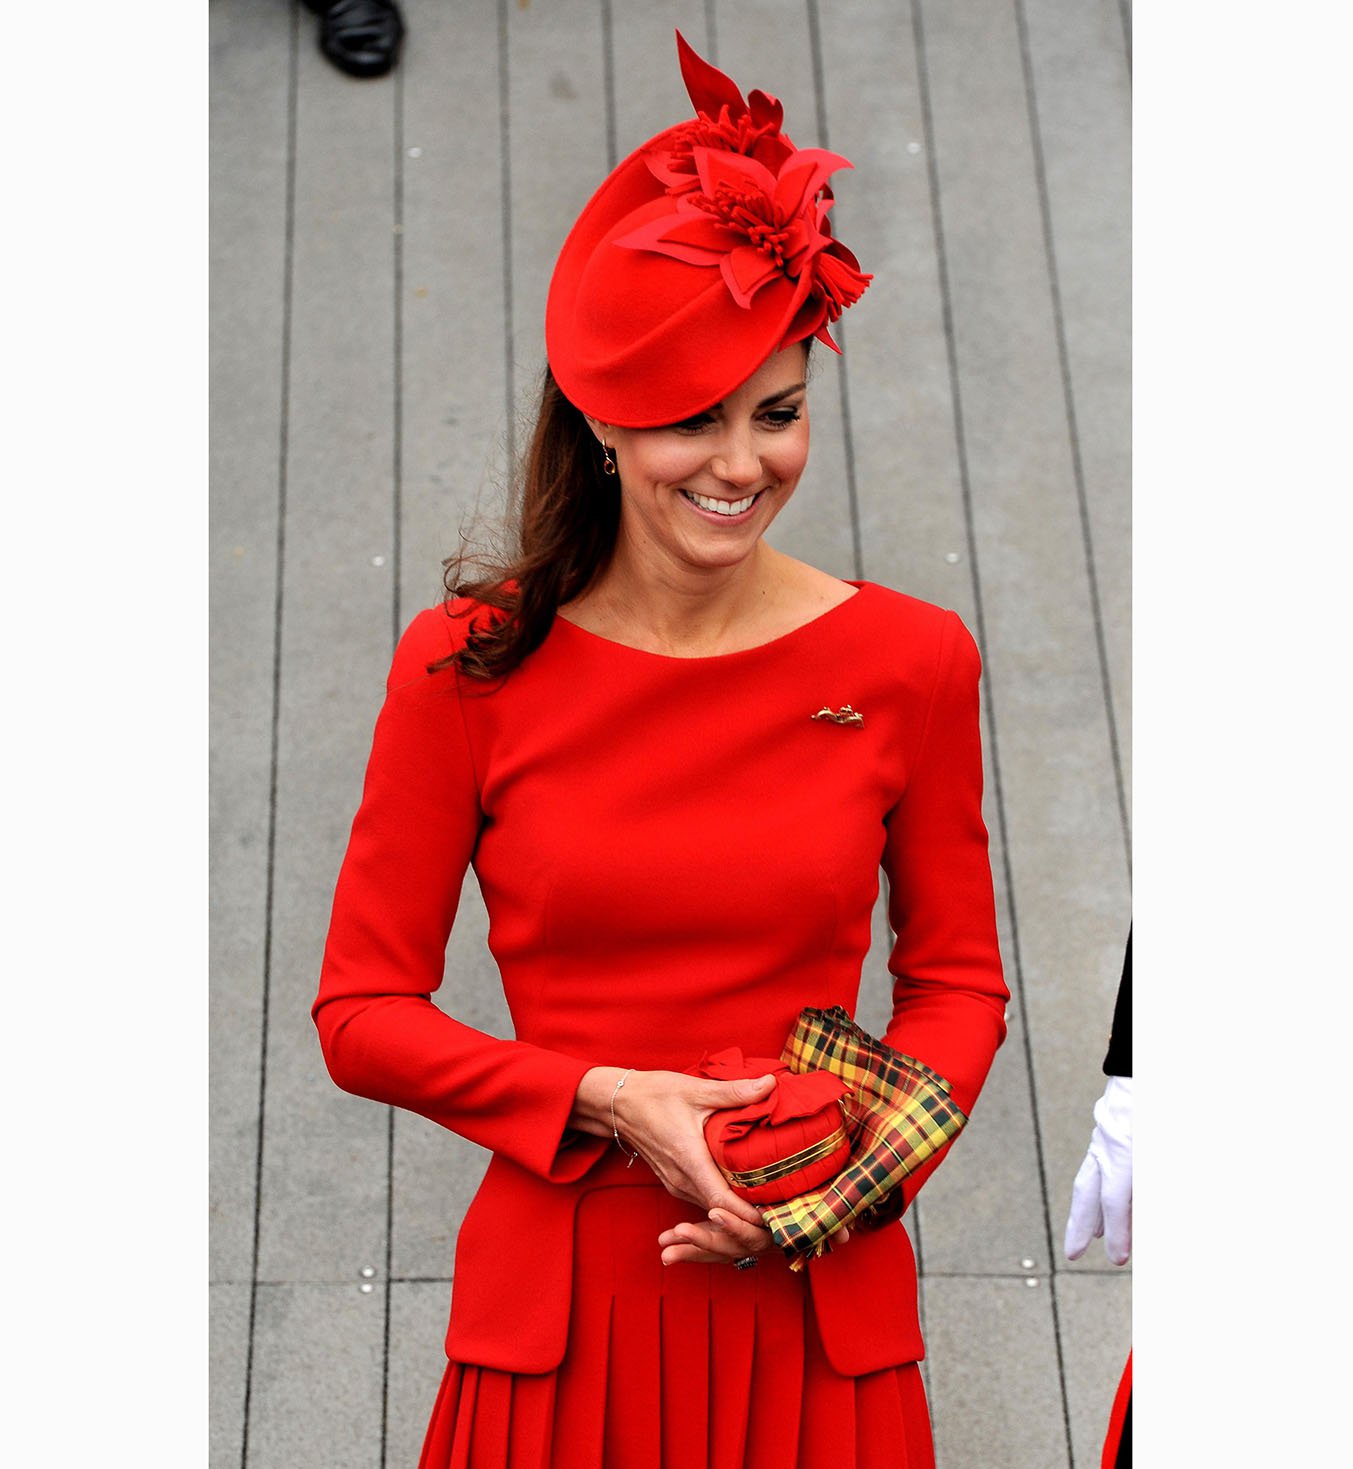 Kate Middleton Duchess of Cambridge dress by Alexander McQueen